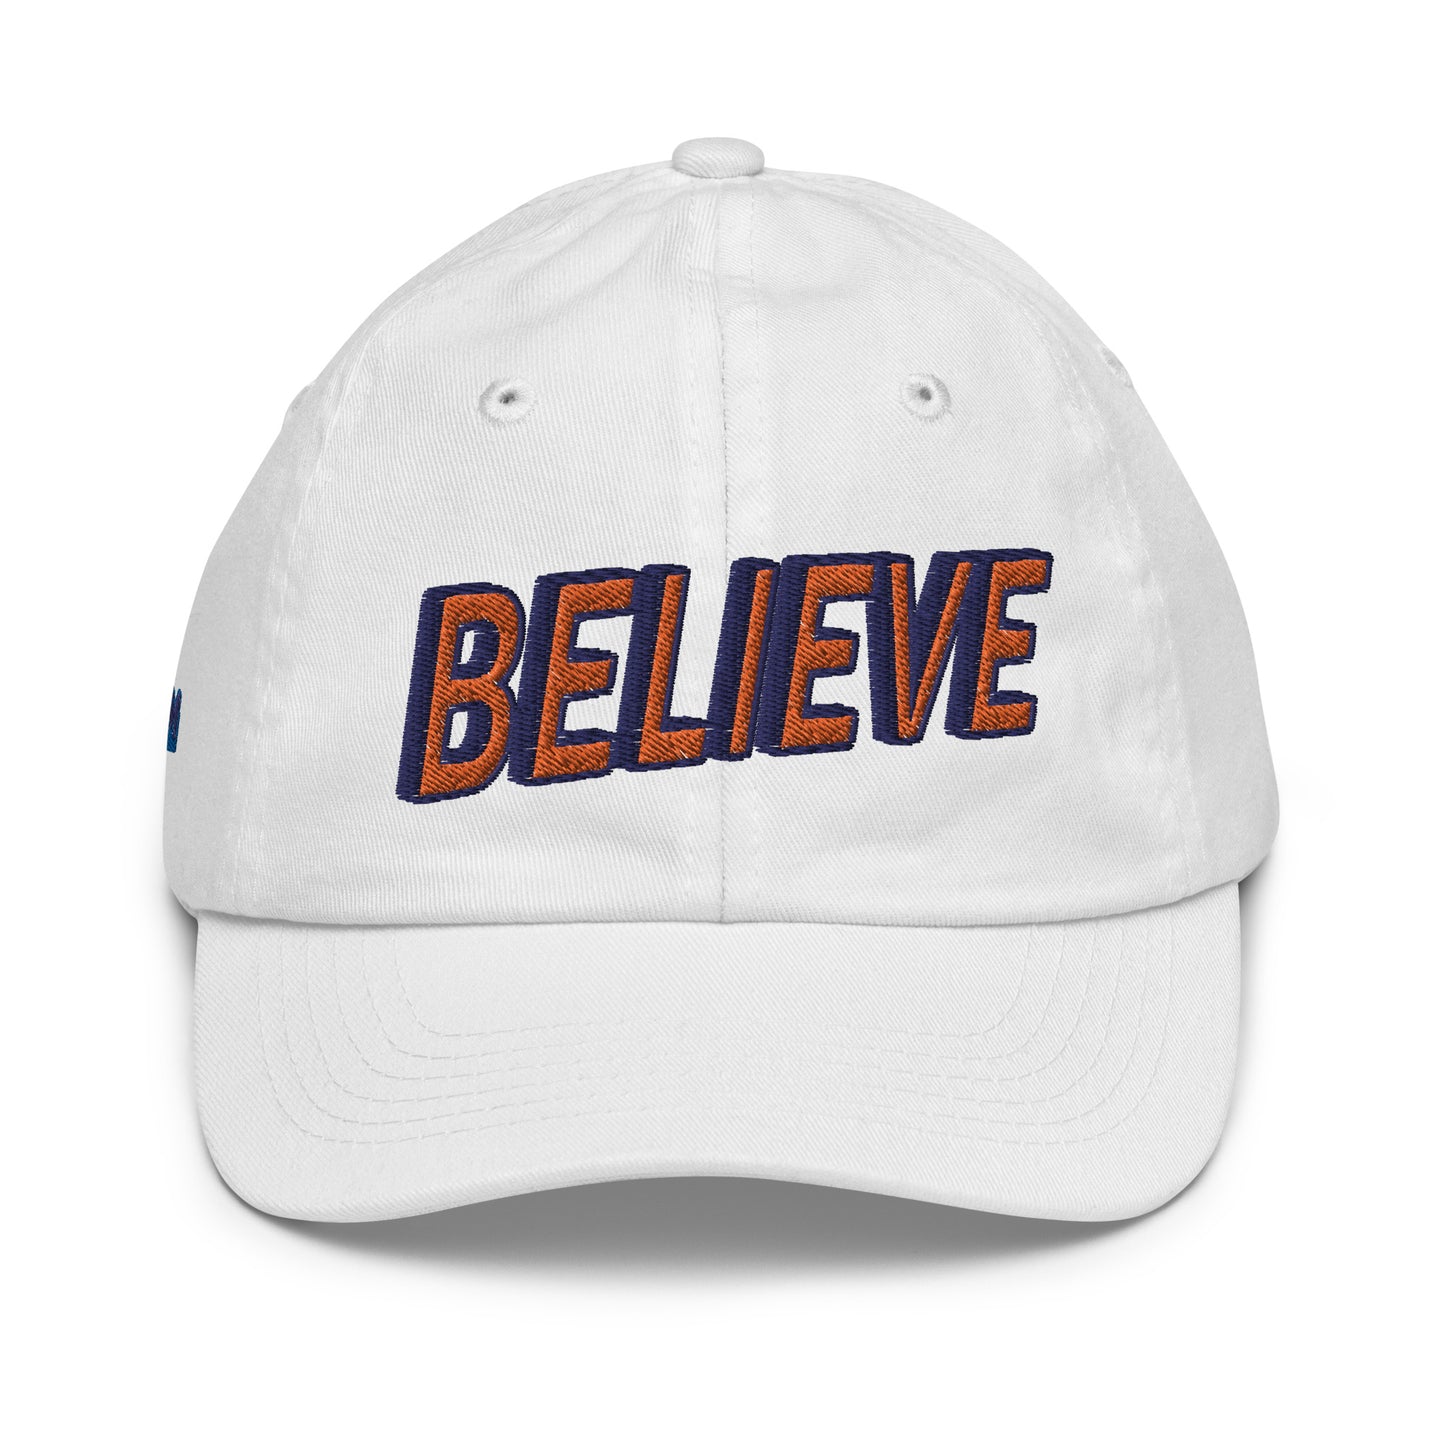 Believe Youth Baseball Cap